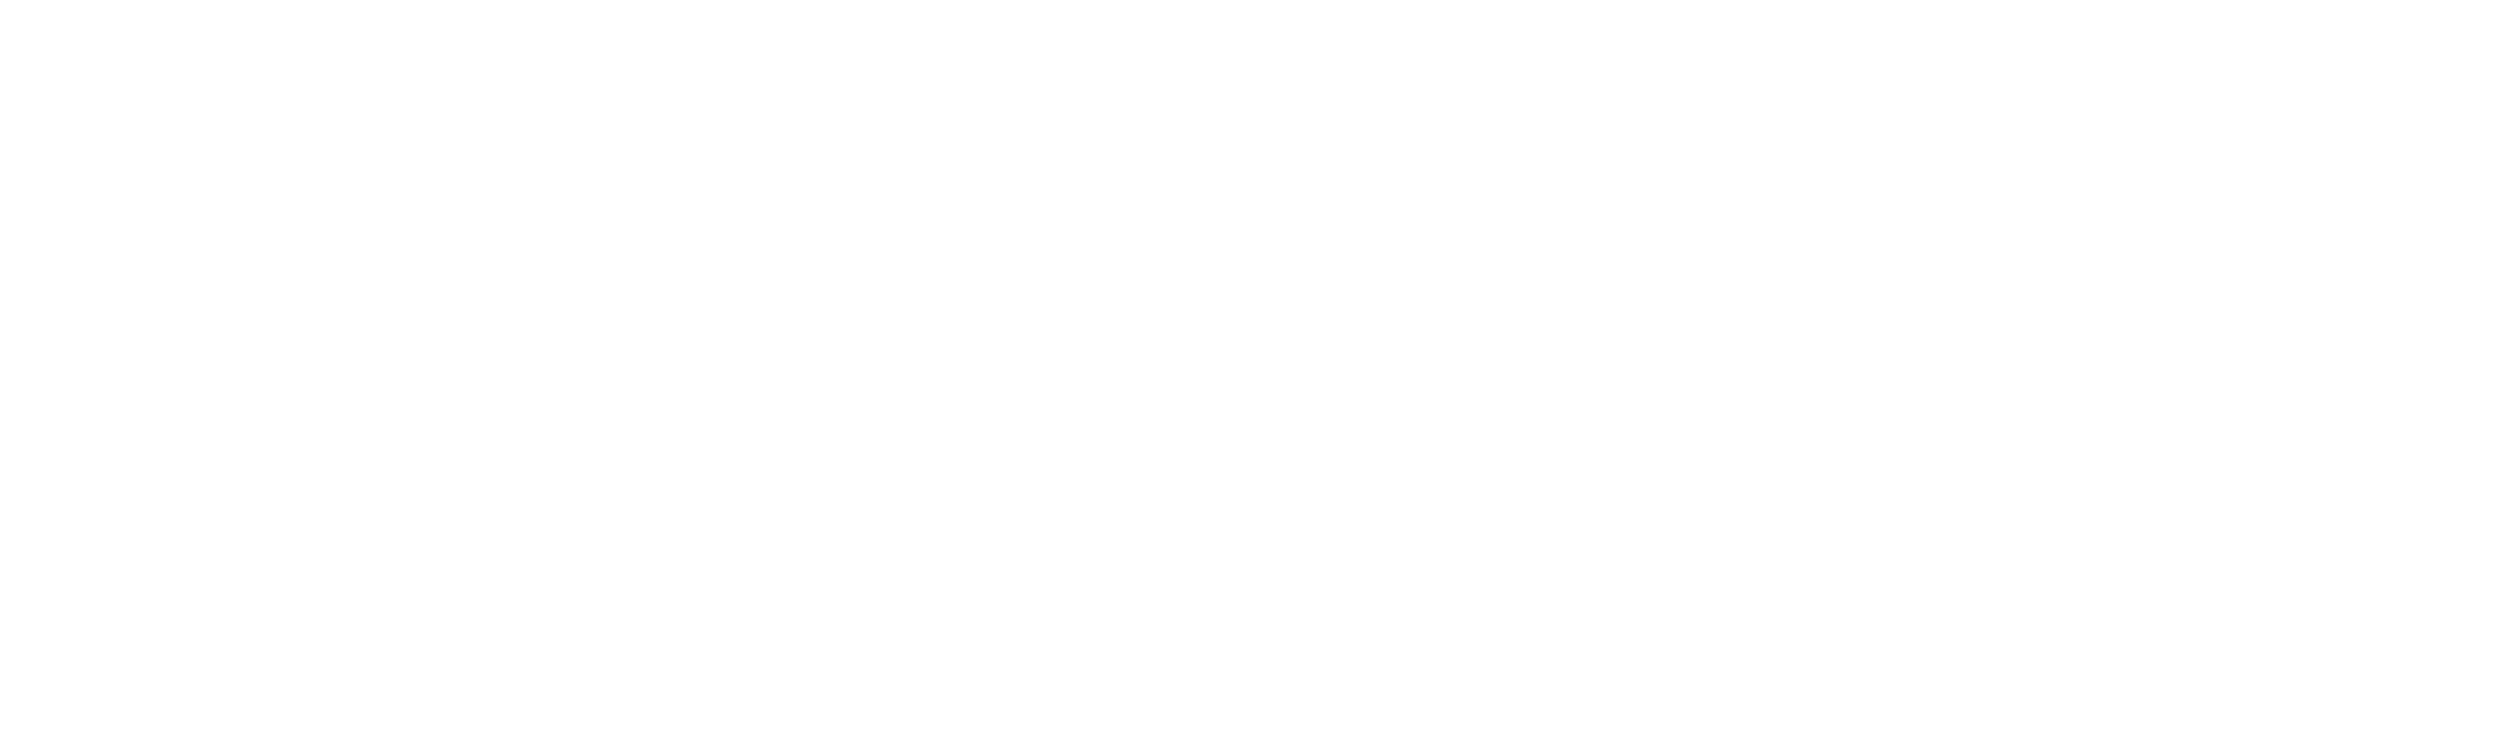 Stokk Construction